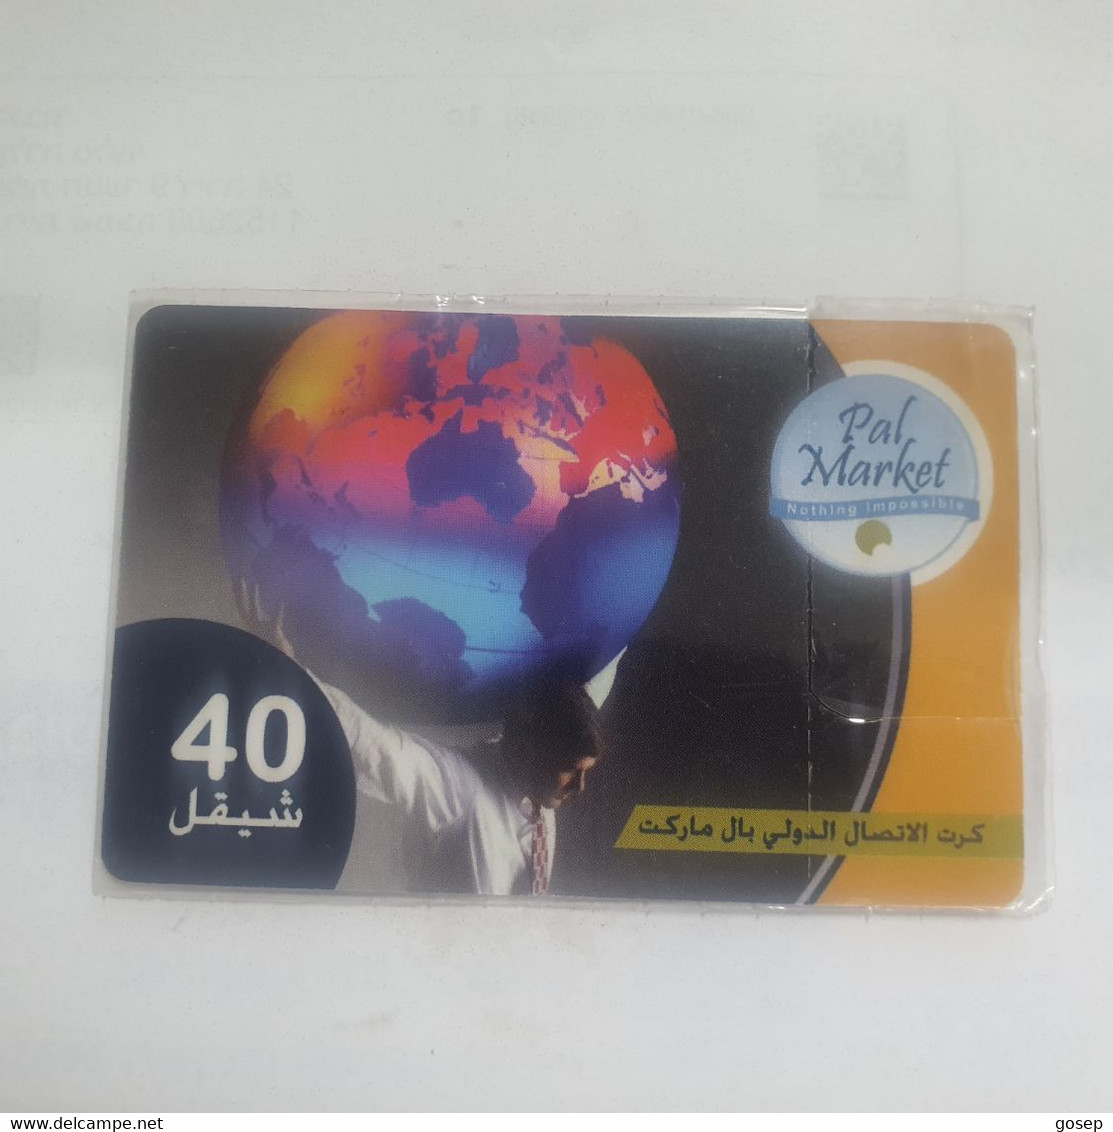 PALESTINE-(PA-G-0010F)-pal Market-(390)-(cod Enclosed-123701620)-(40₪)-(31.12.07)mint Card+1prepiad Free - Palestine